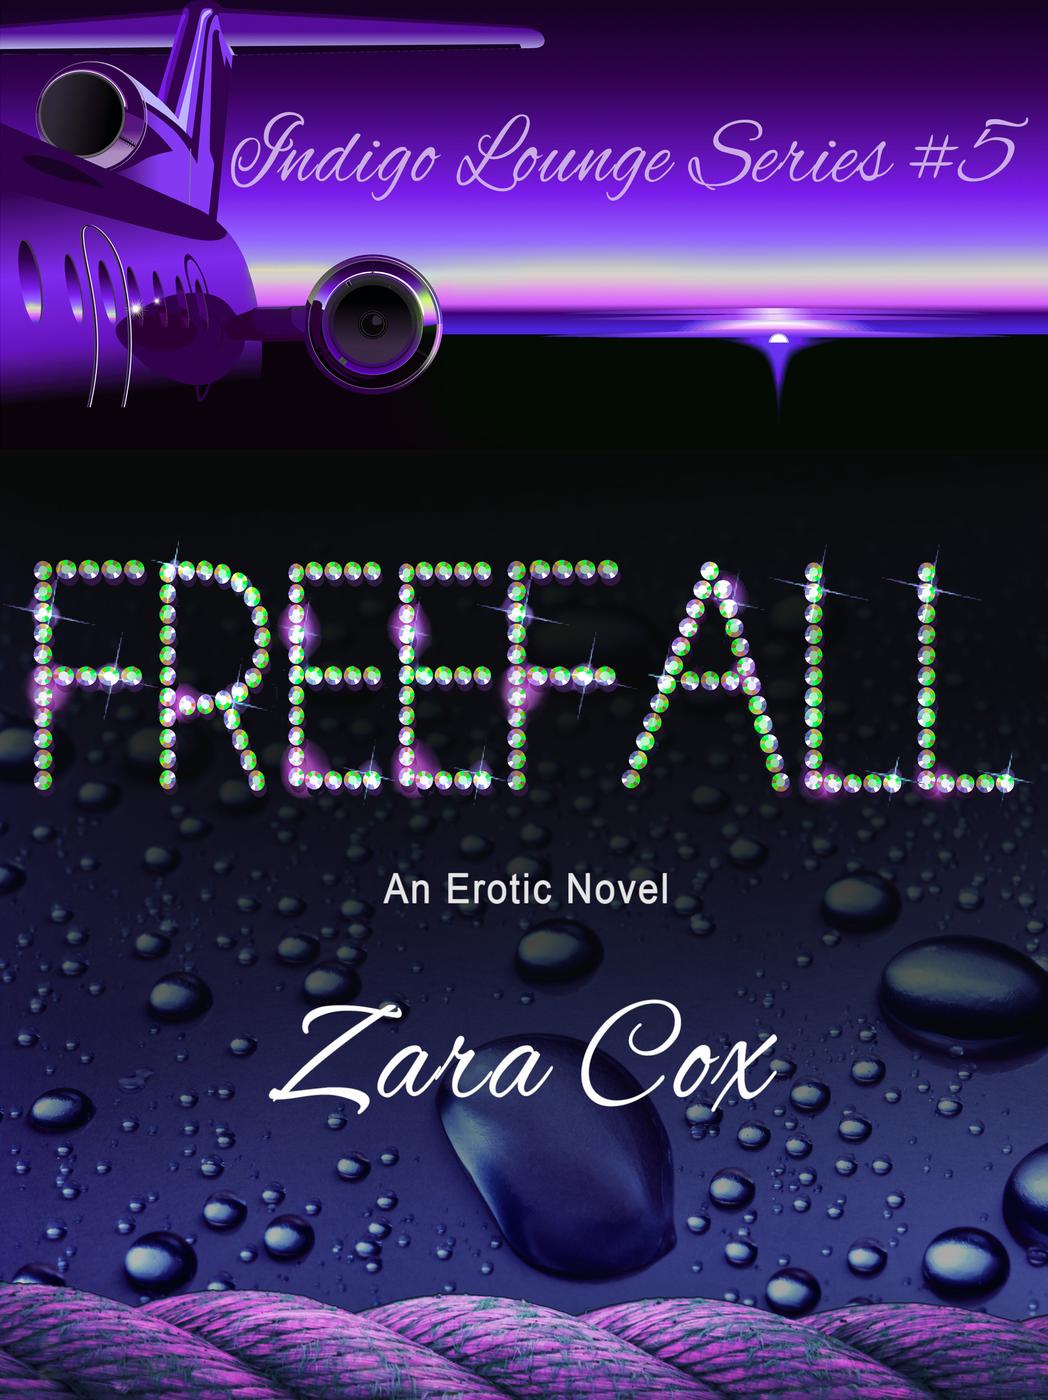 Freefall (The Indigo Lounge Series, #5) (2015) by Zara Cox